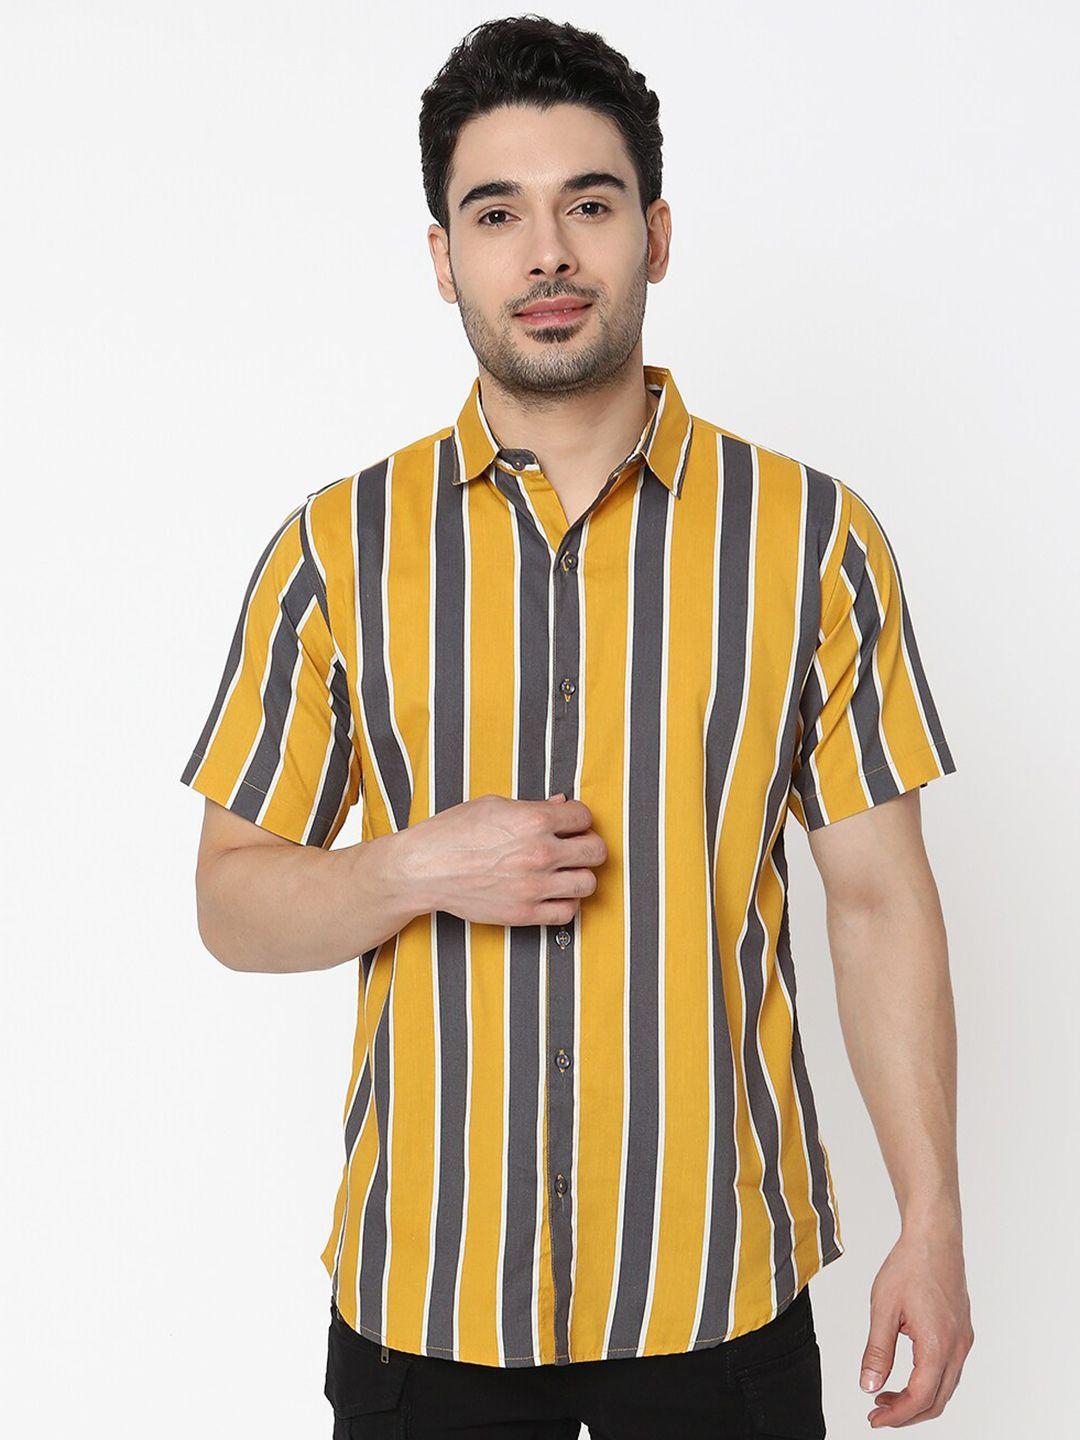 7shores classic vertical striped spread collar casual shirt